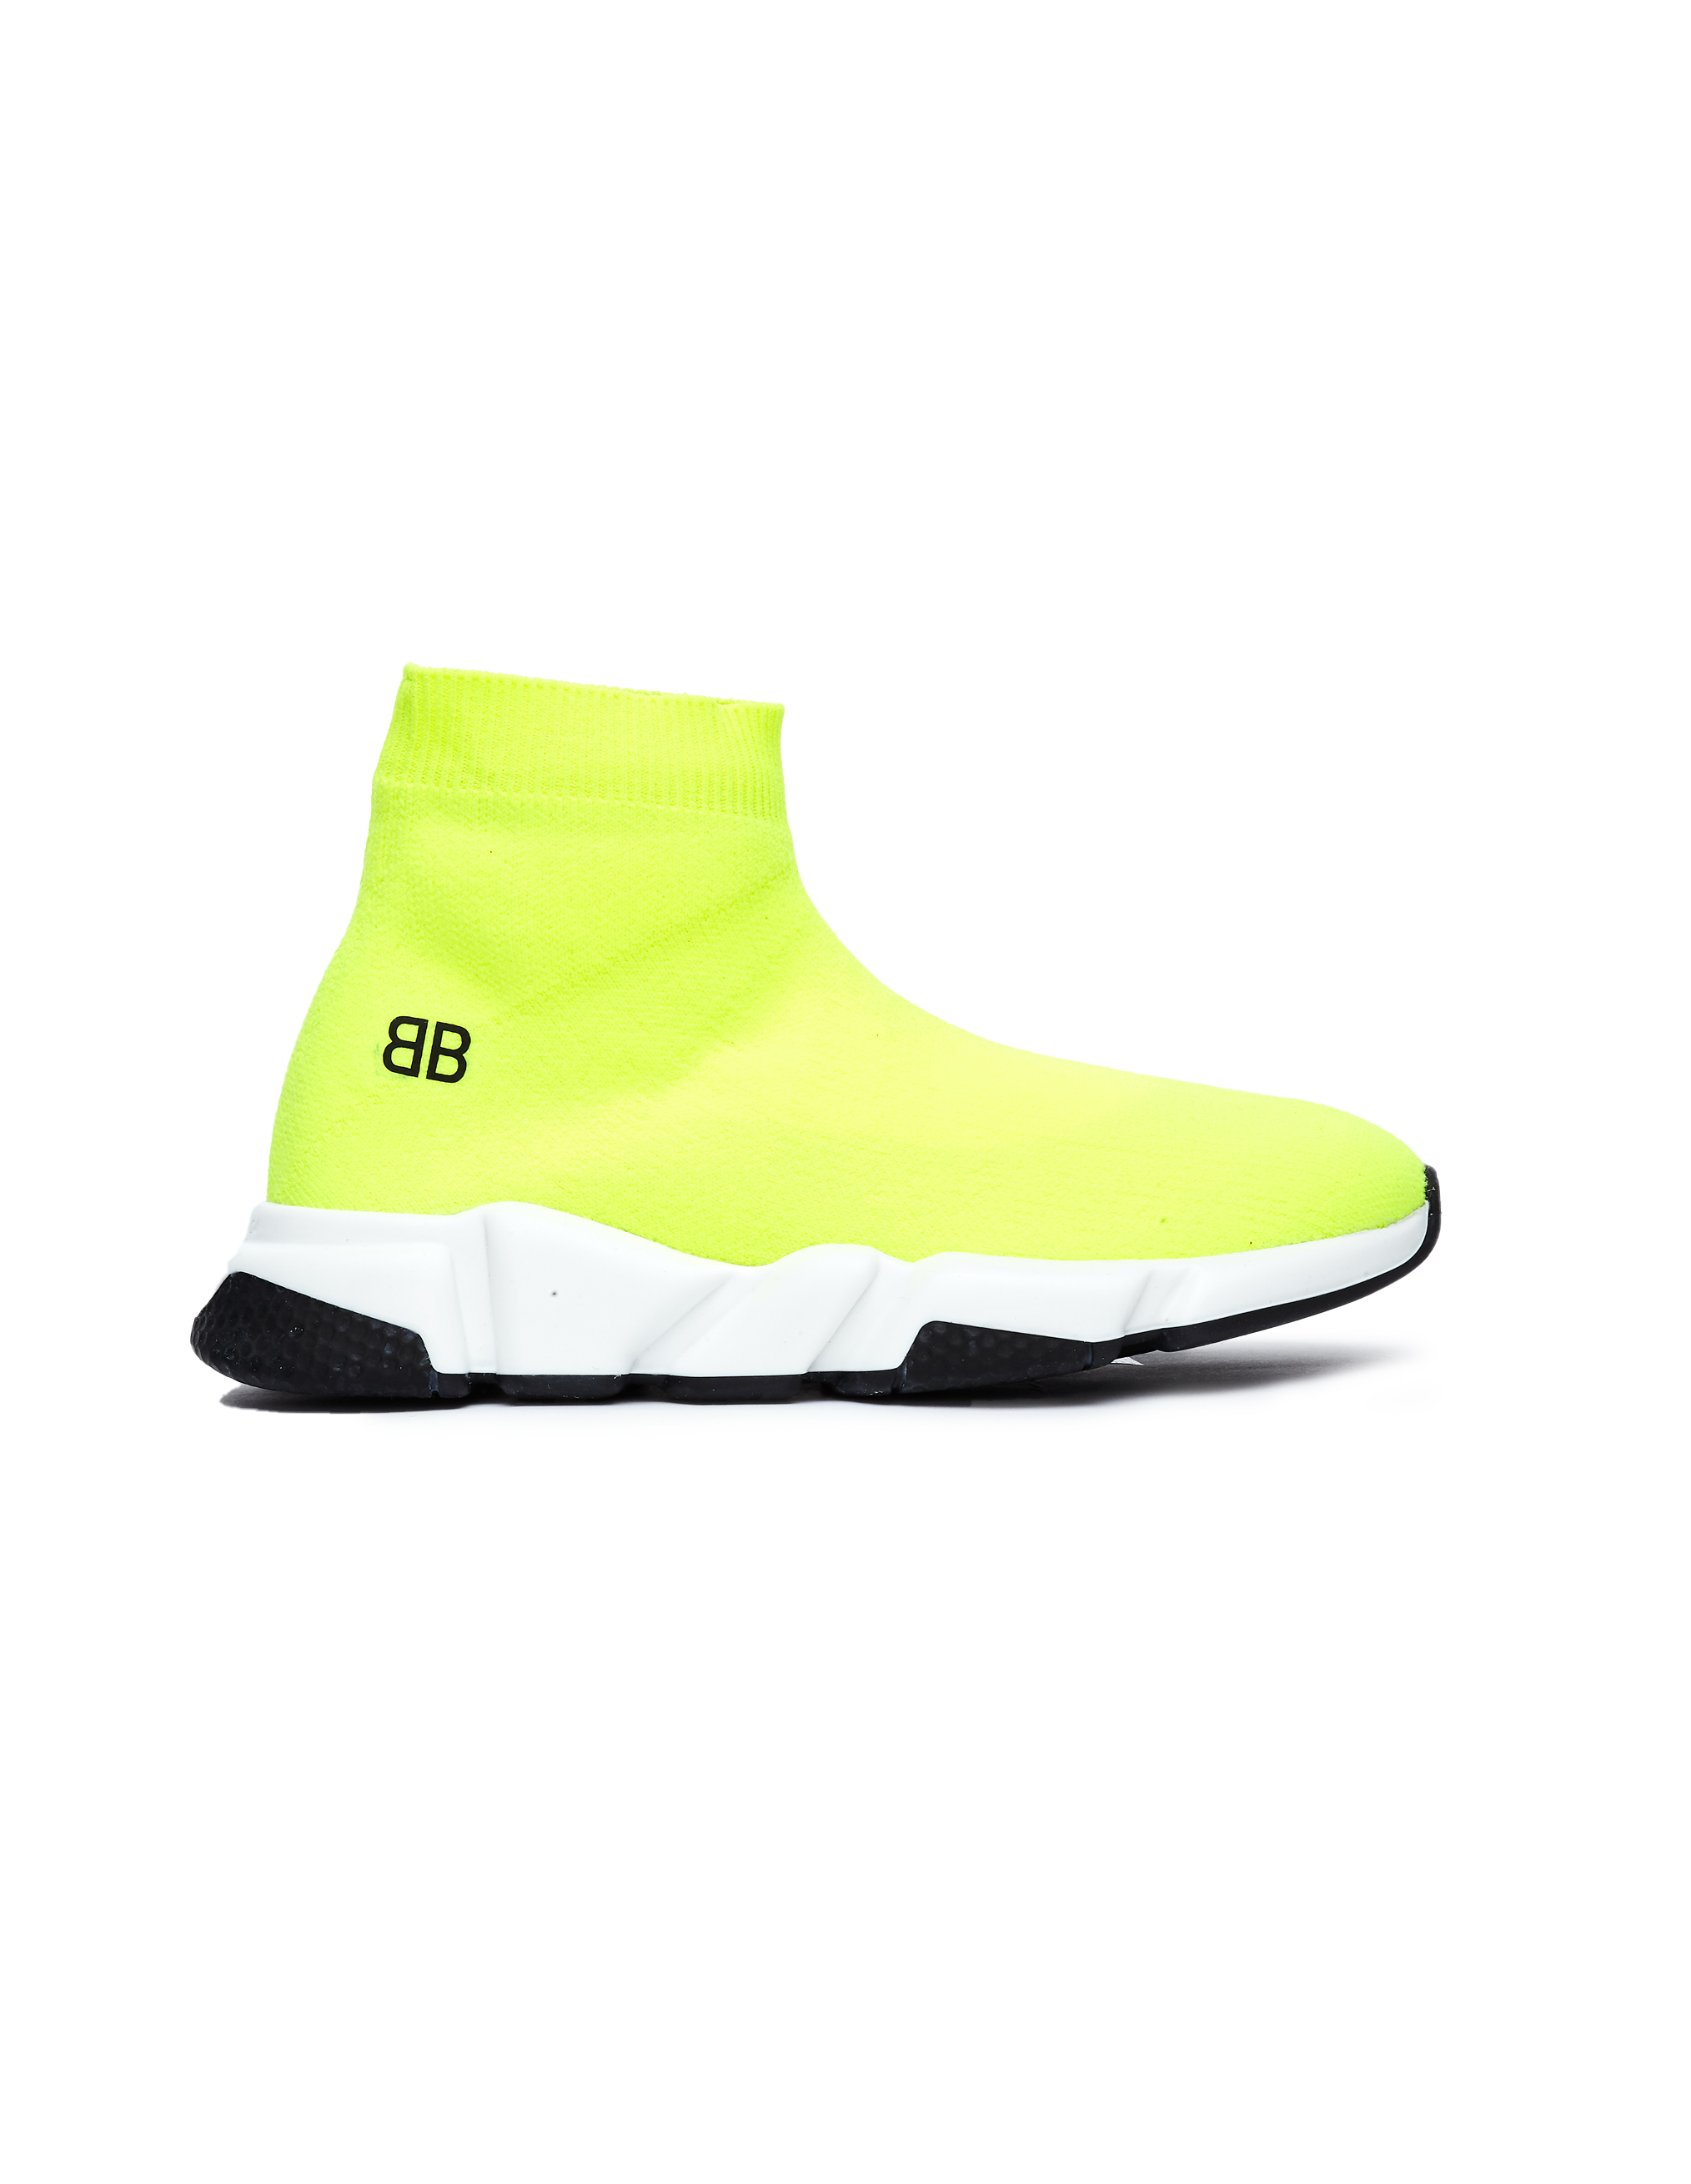 neon yellow trainers